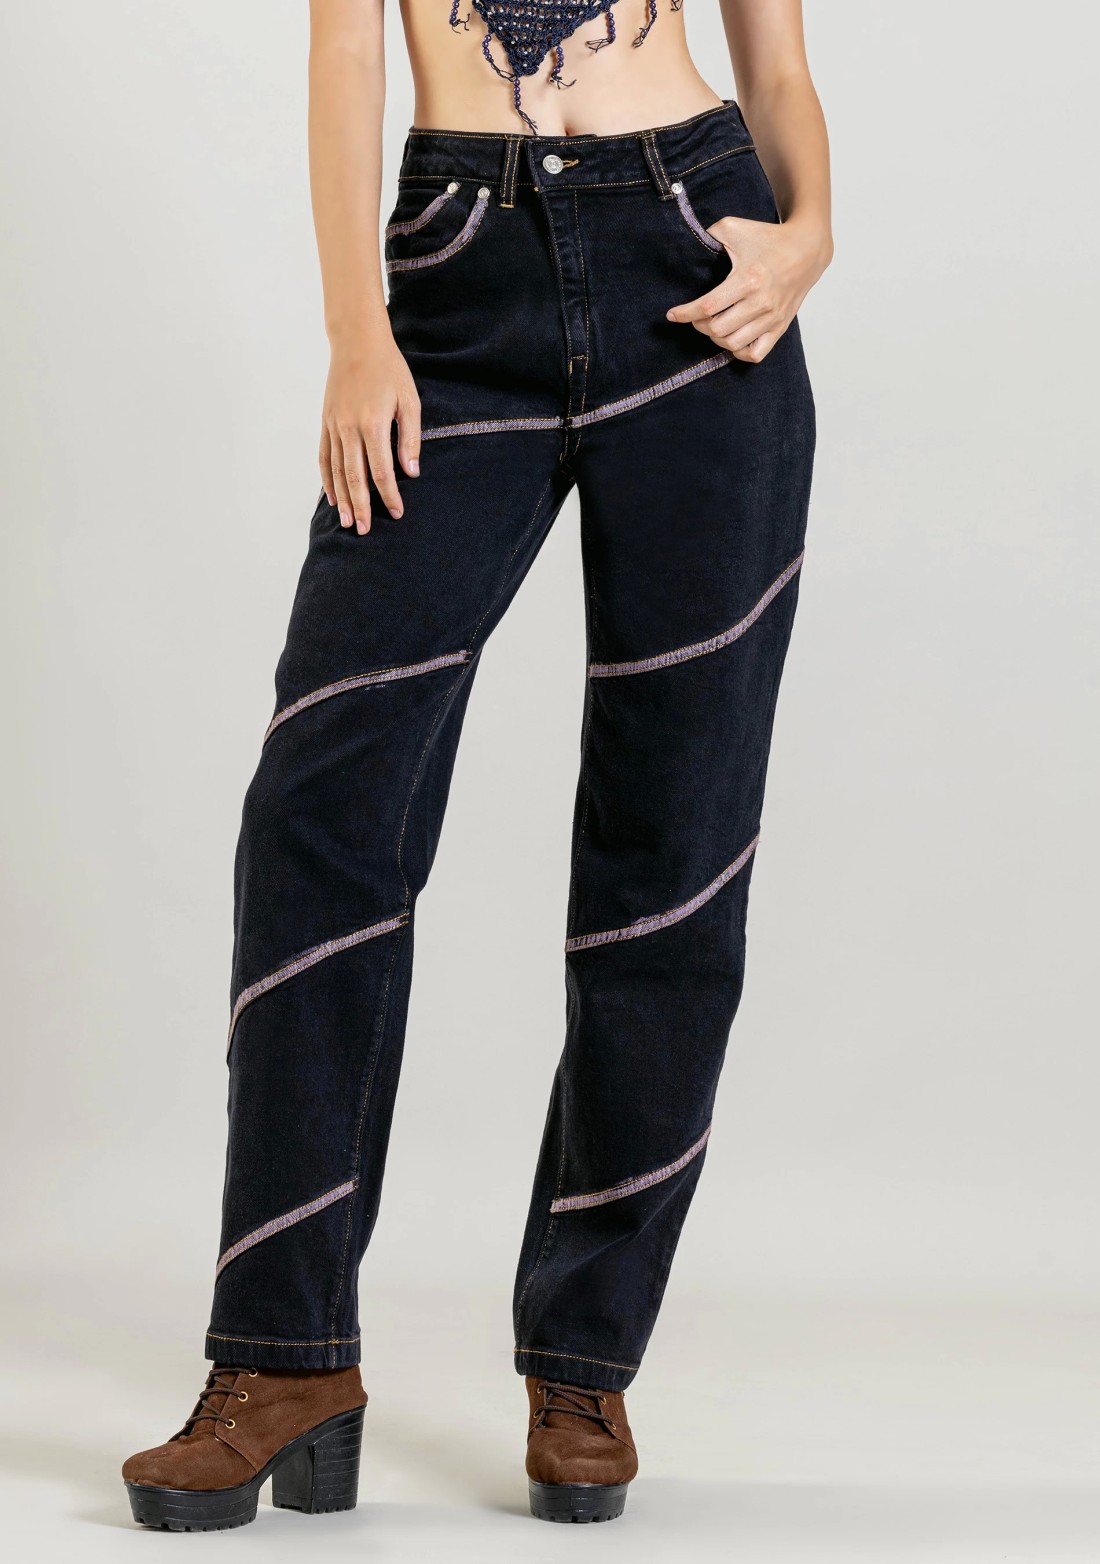 Black Straight Fit Women's Fashion jeans